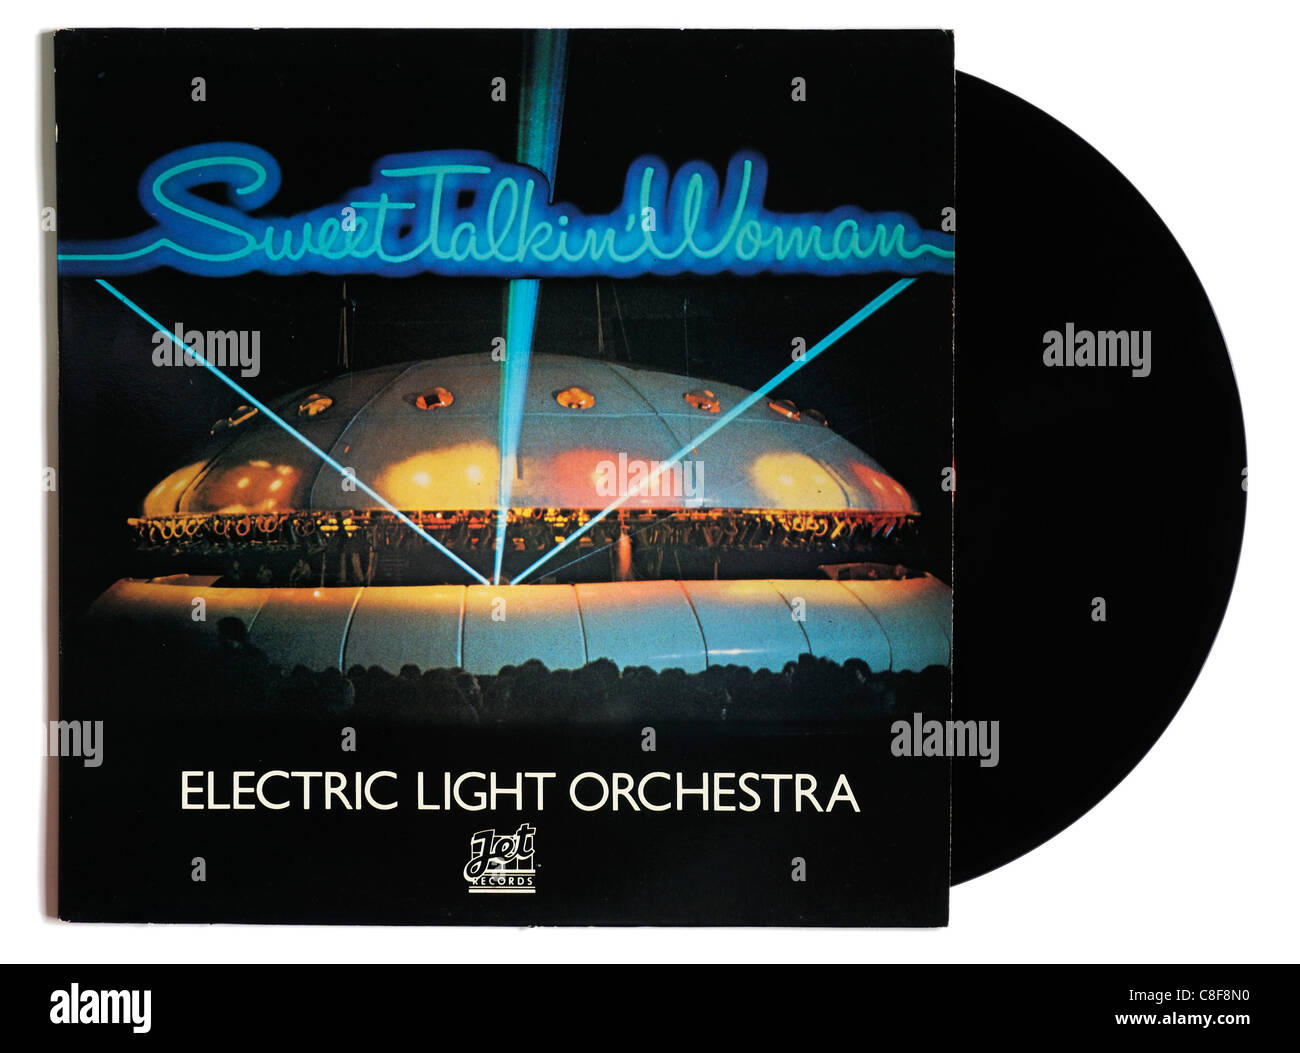 45cat - Electric Light Orchestra - Sweet Talkin' Woman / Fire On